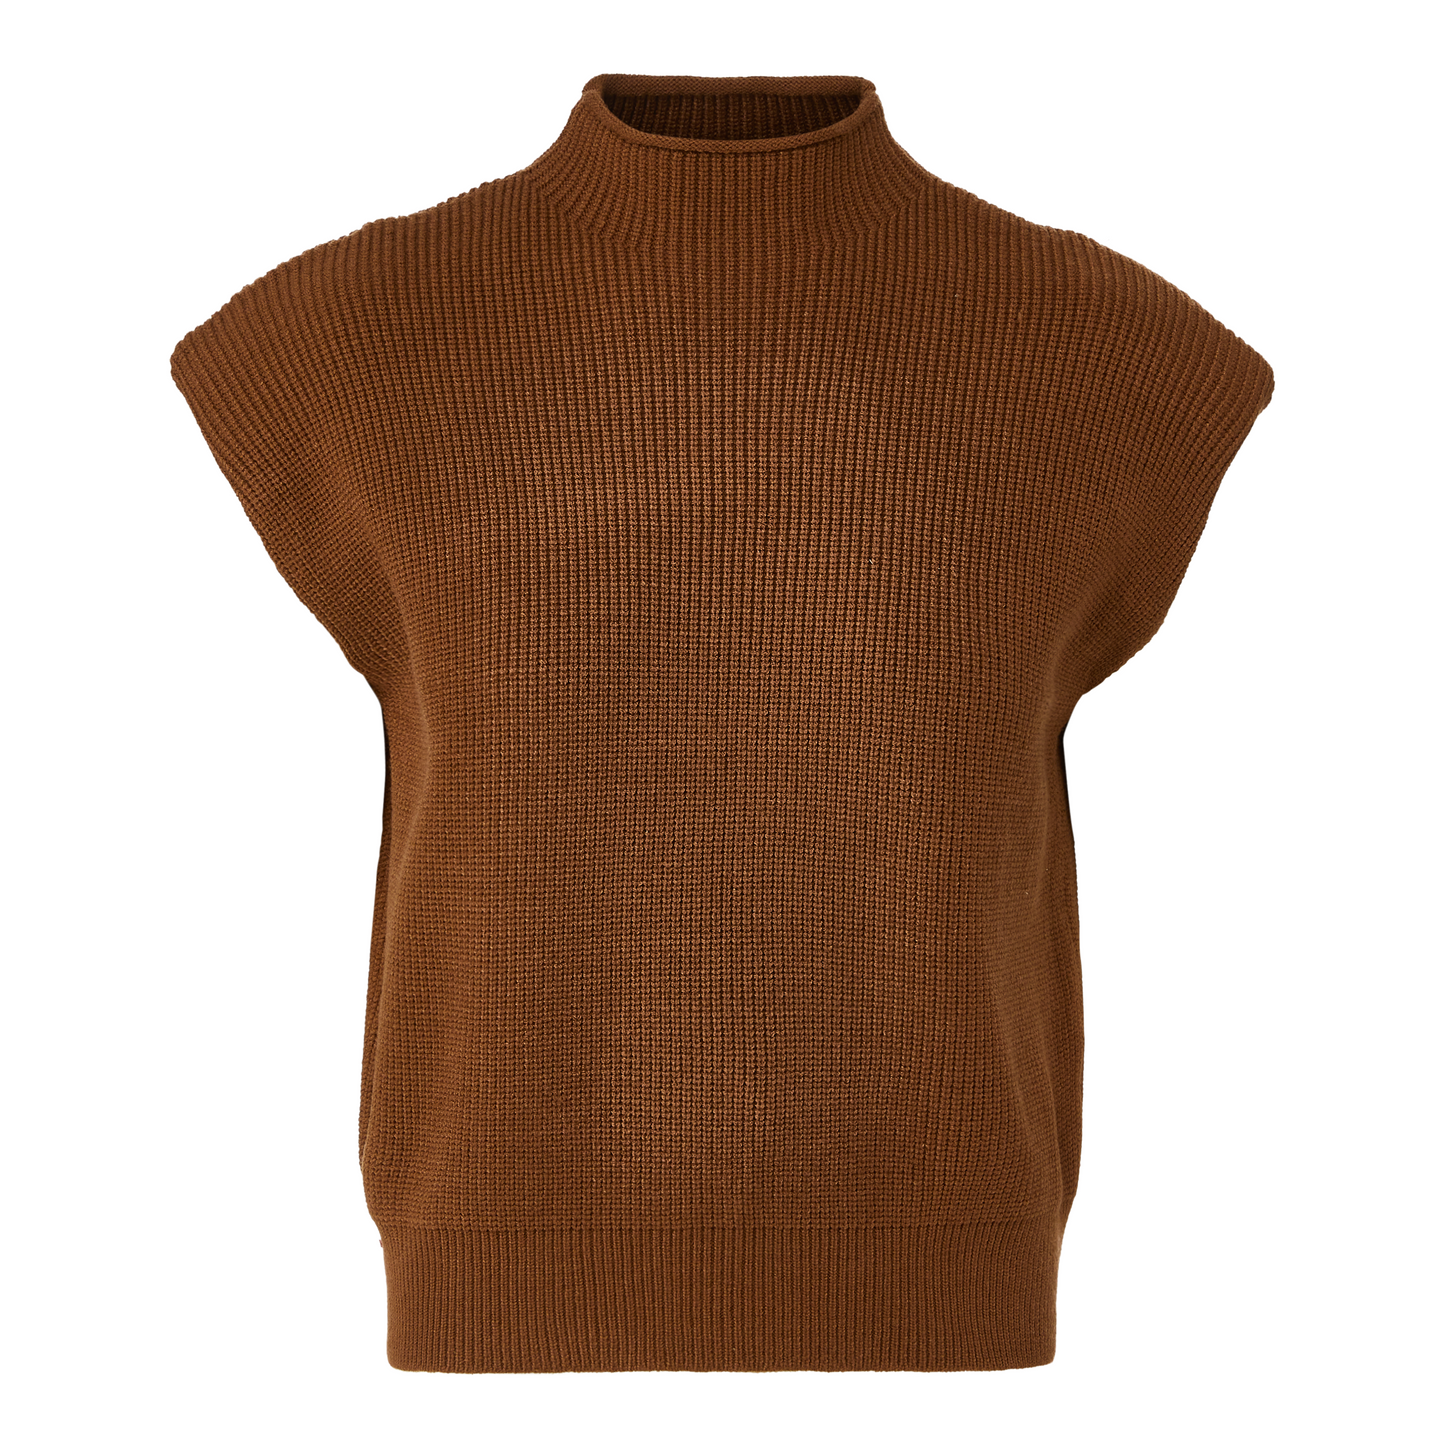 Sleeveless Sweater Top - Coffee